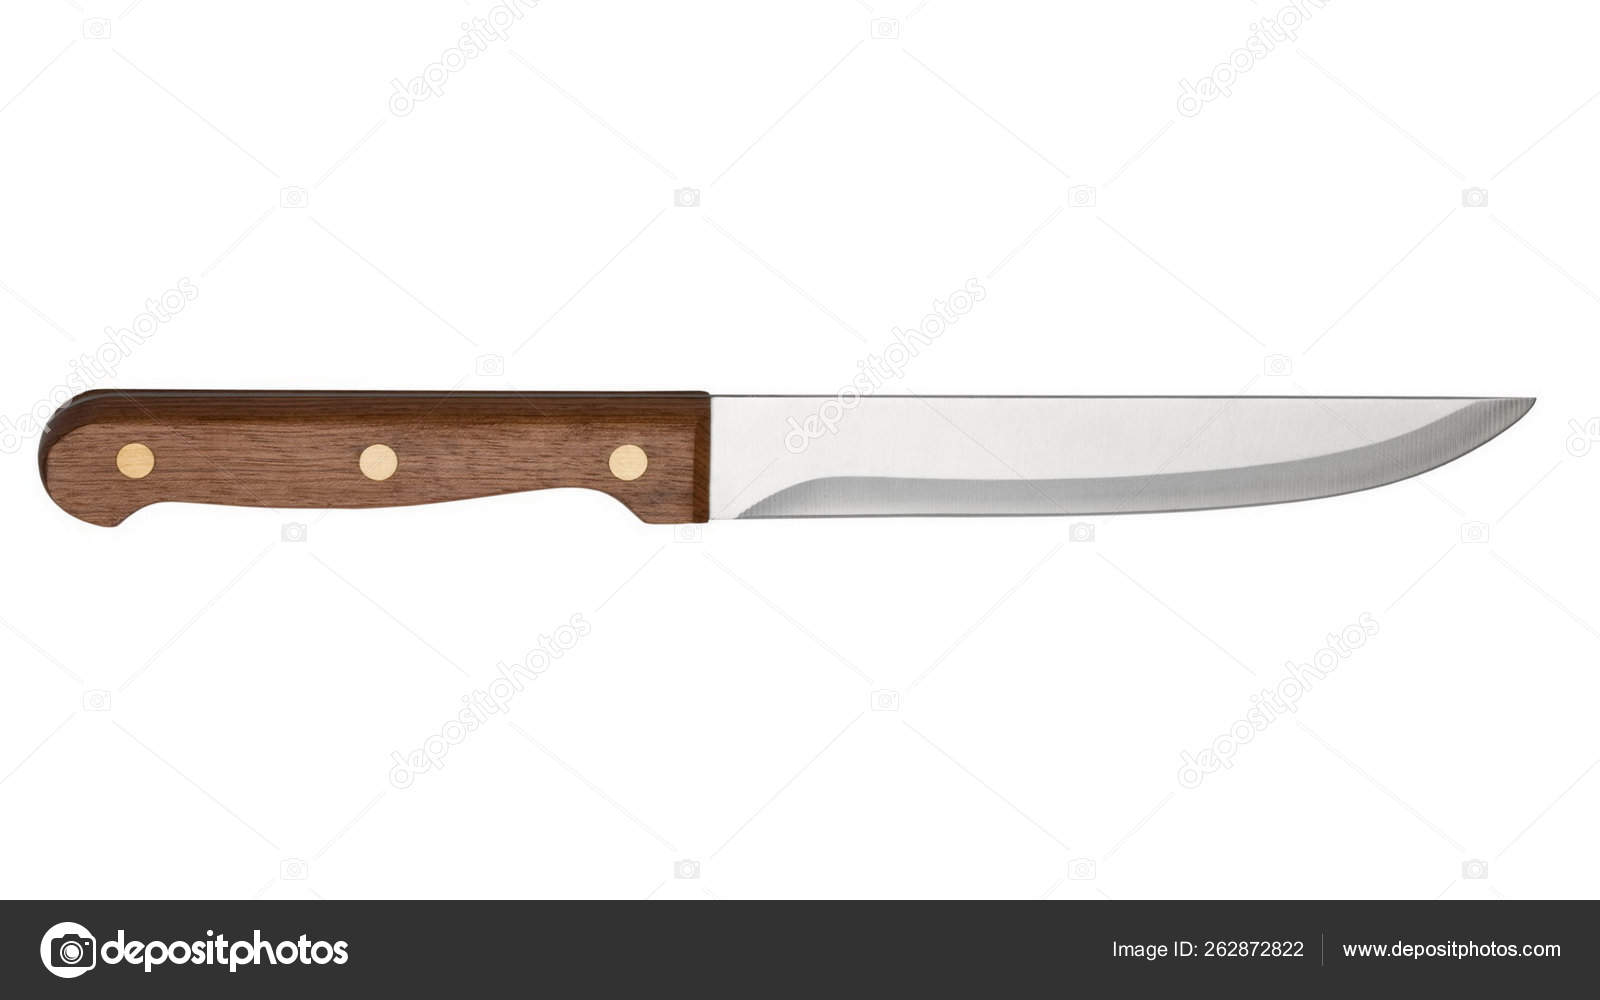 https://st4.depositphotos.com/20524830/26287/i/1600/depositphotos_262872822-stock-photo-small-kitchen-knife-wooden-handle.jpg